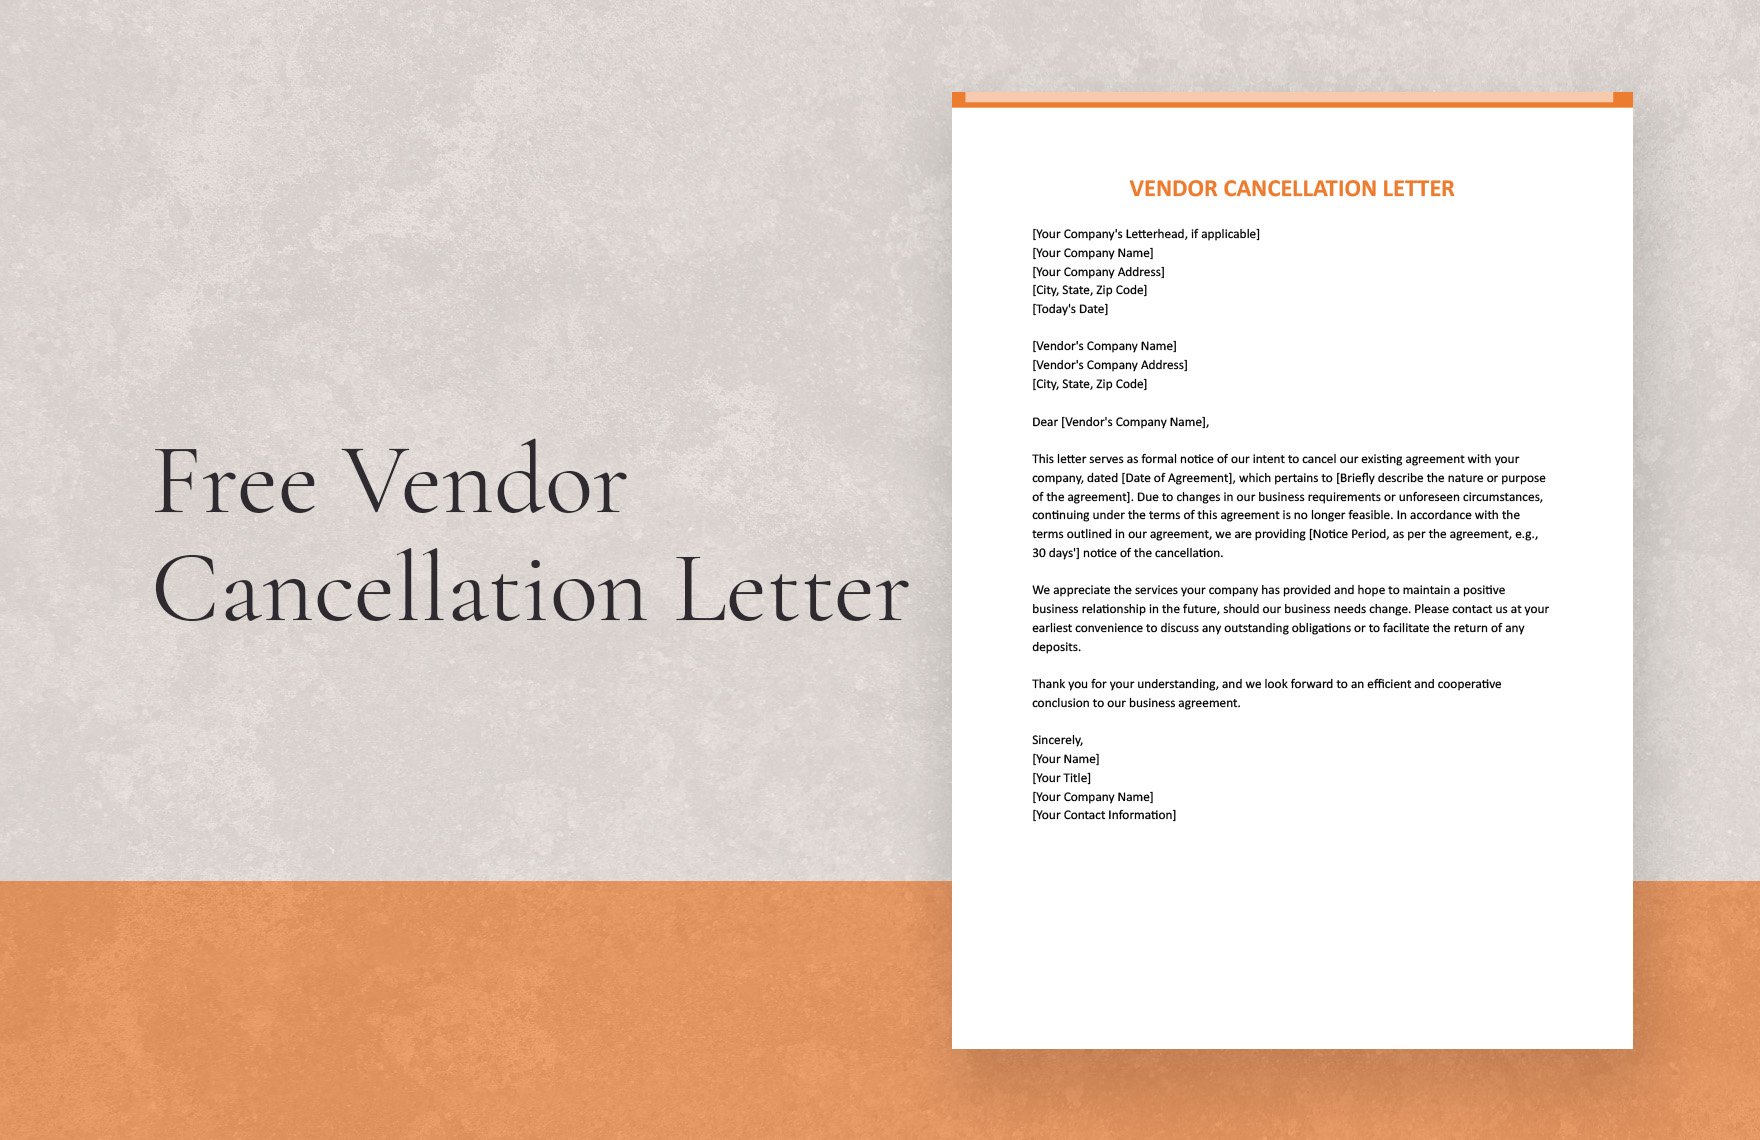 Vendor Cancellation Letter